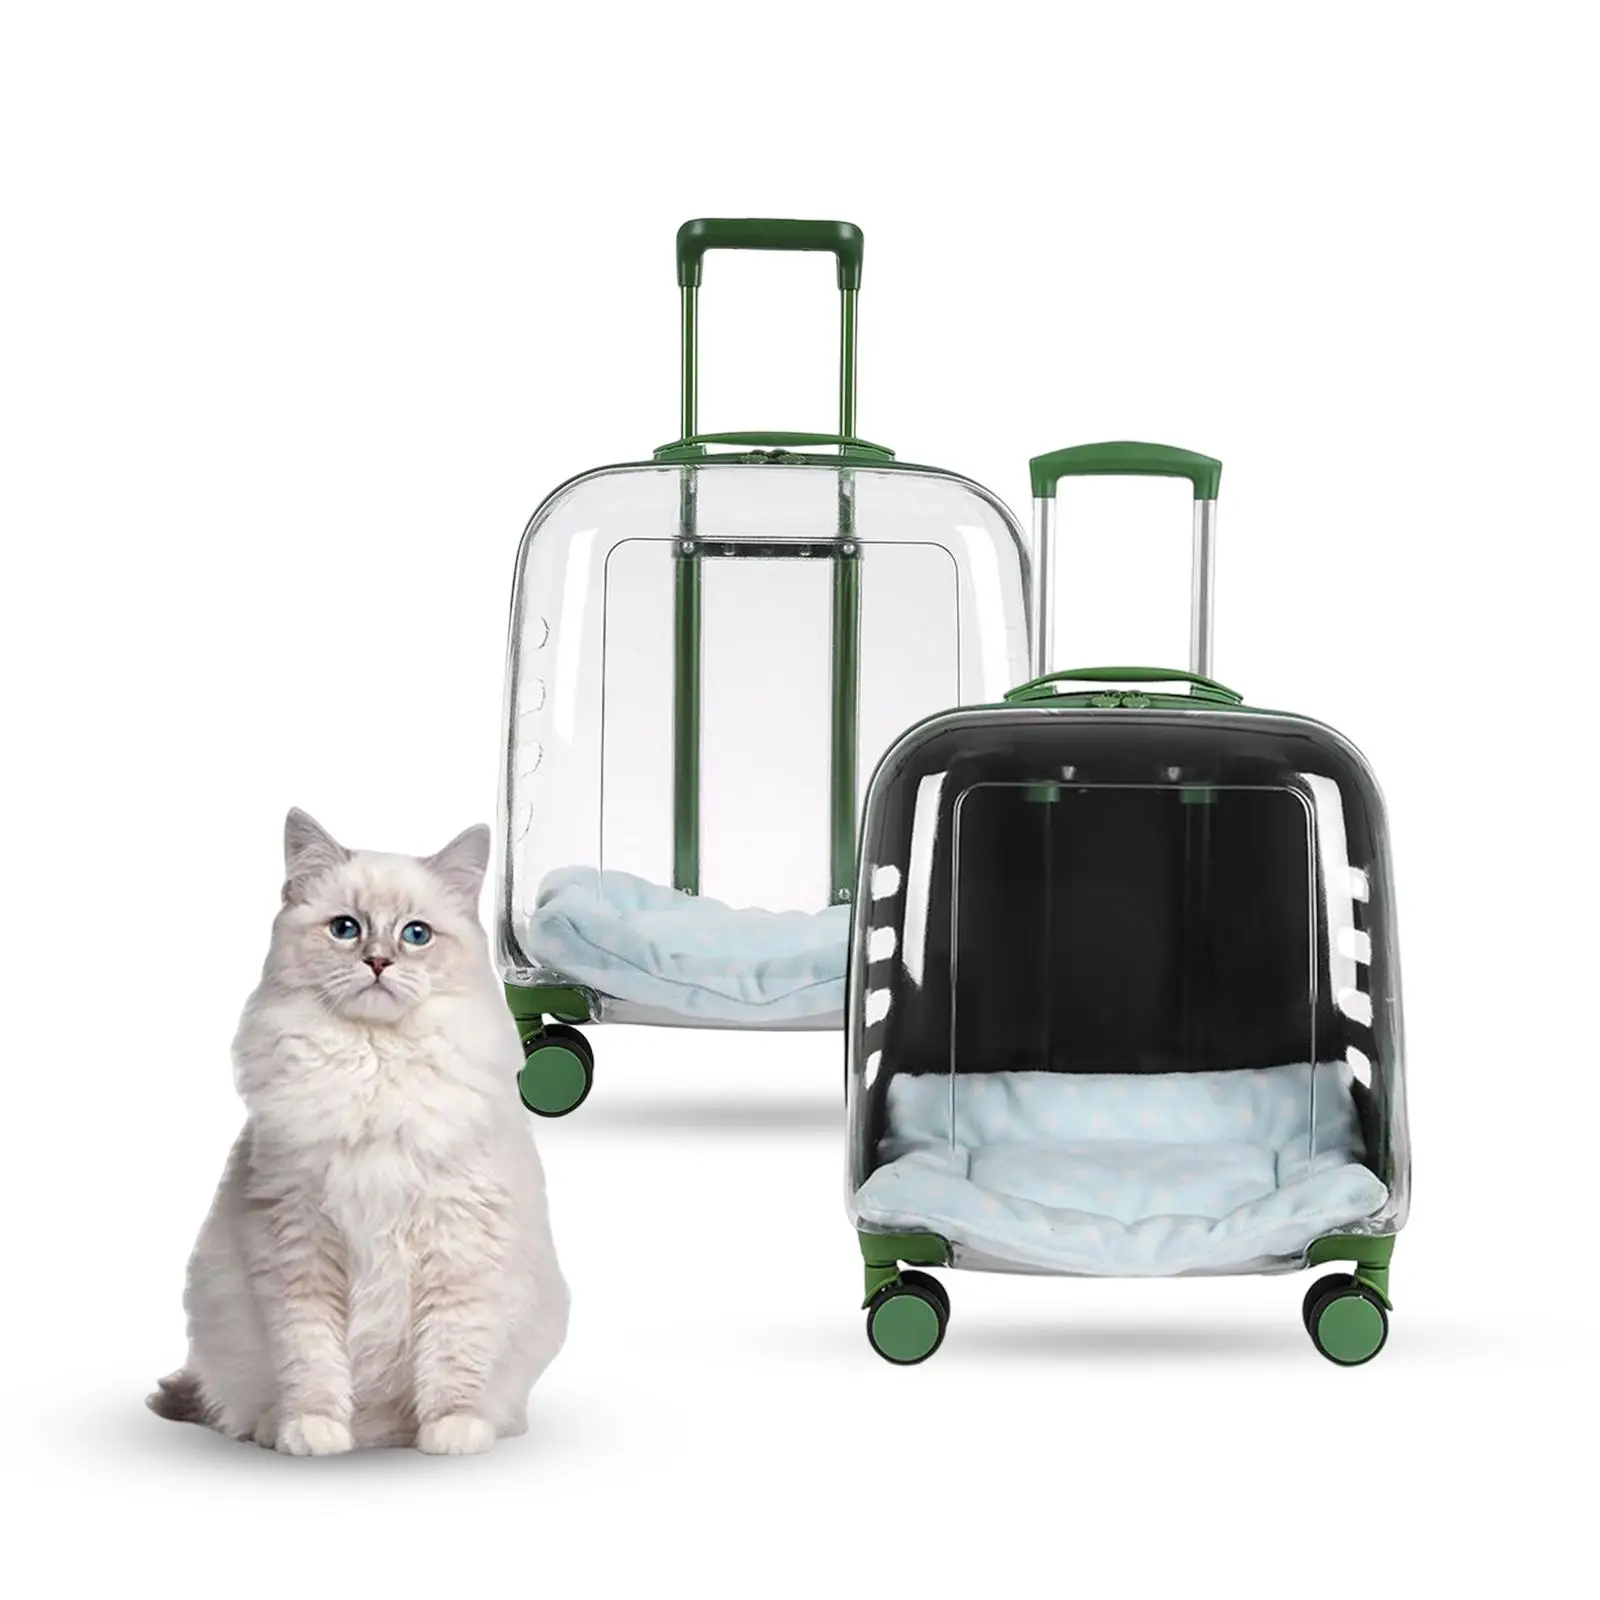 Pet Trolley Case Cat Luggage Bag Multifunctional Silent Luggage dog Handbag for Dog Carrying Travel Hiking Outdoor Fishing images - 6